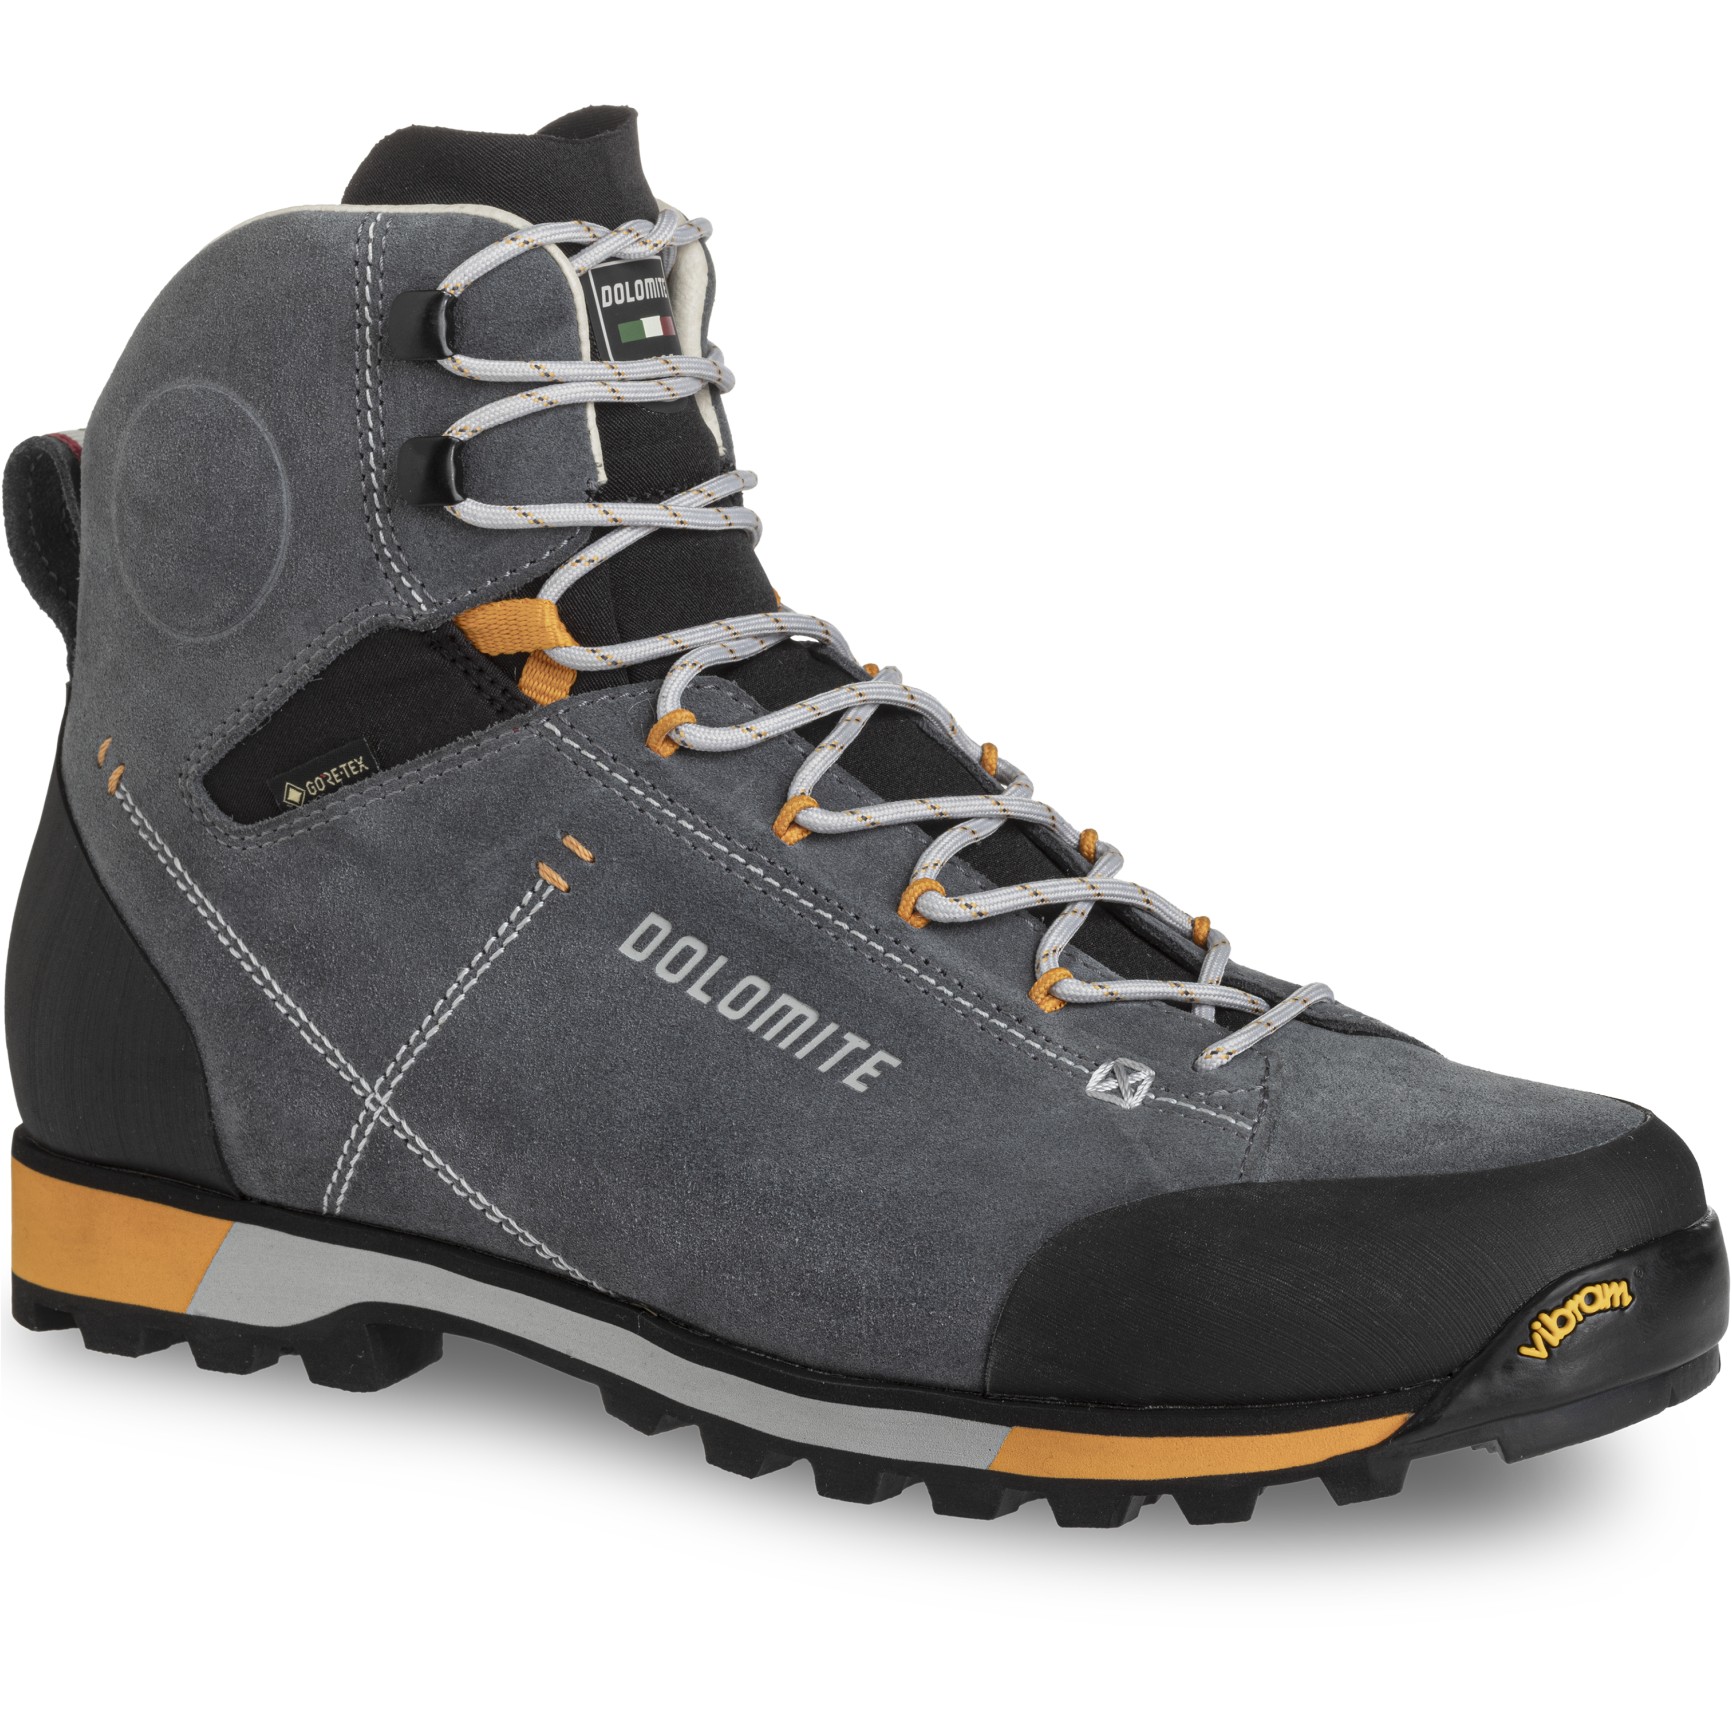 Picture of Dolomite 54 Hike Evo GTX Hiking Shoes - gunmetal grey